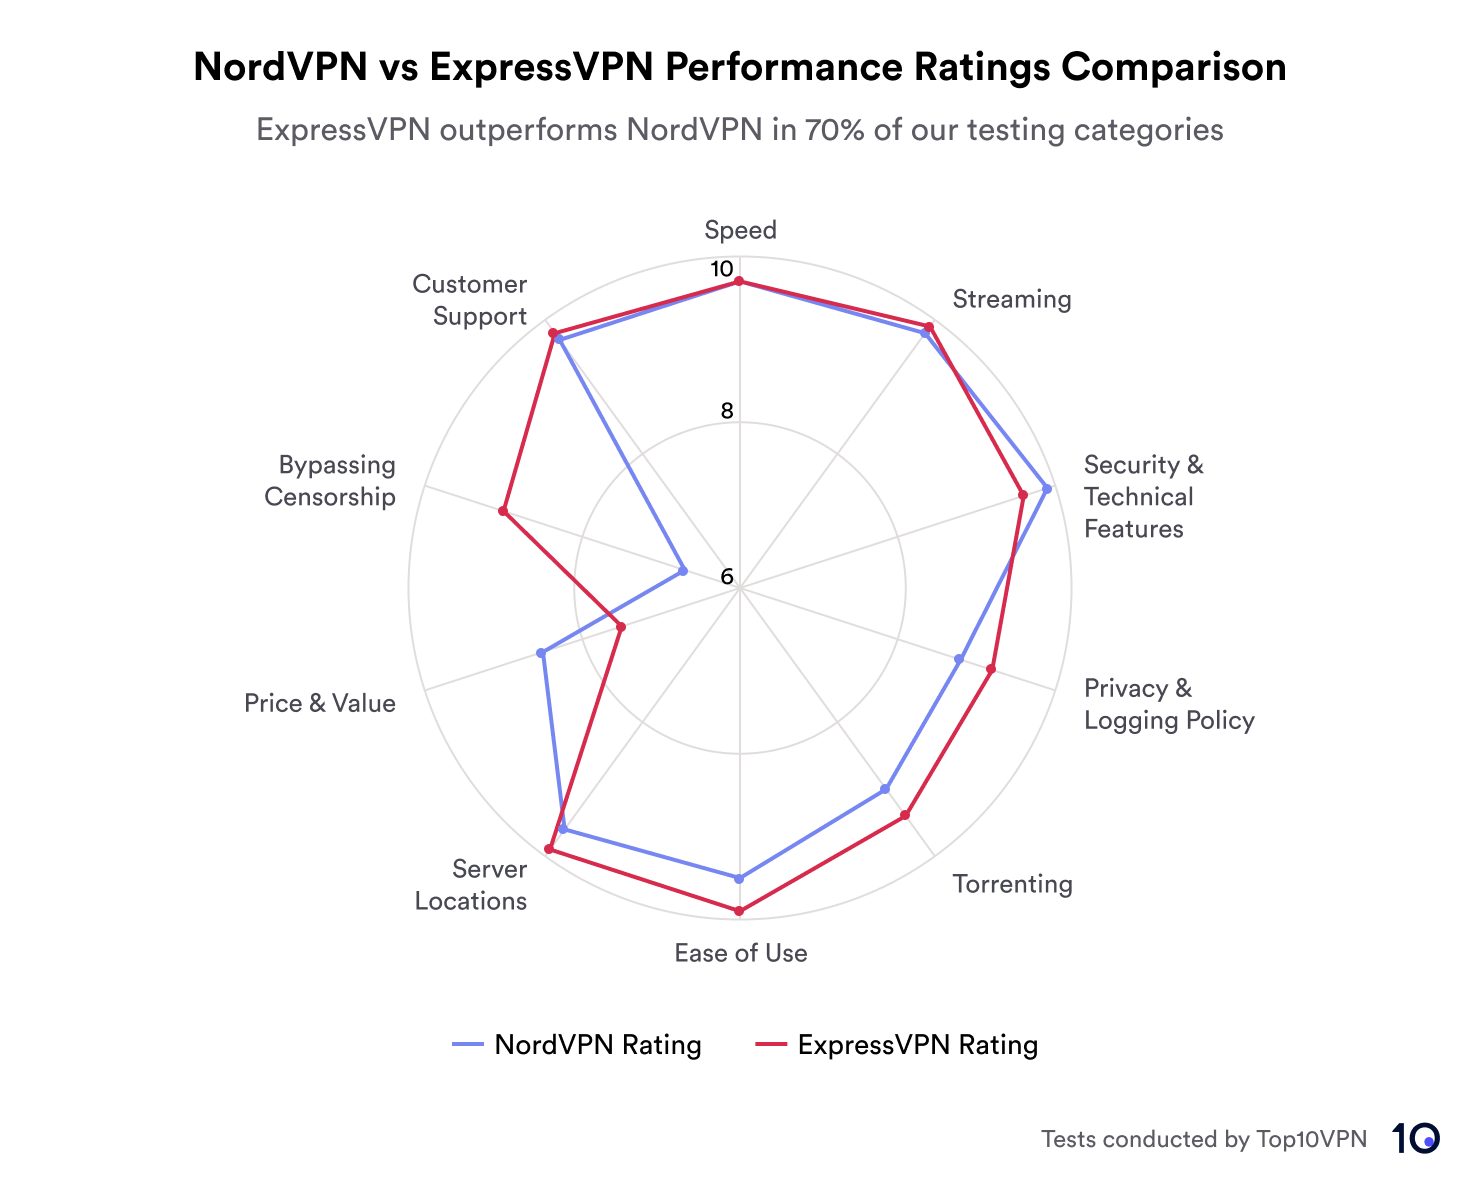 Radar chart comparing NordVPN's and ExpressVPN's performance ratings